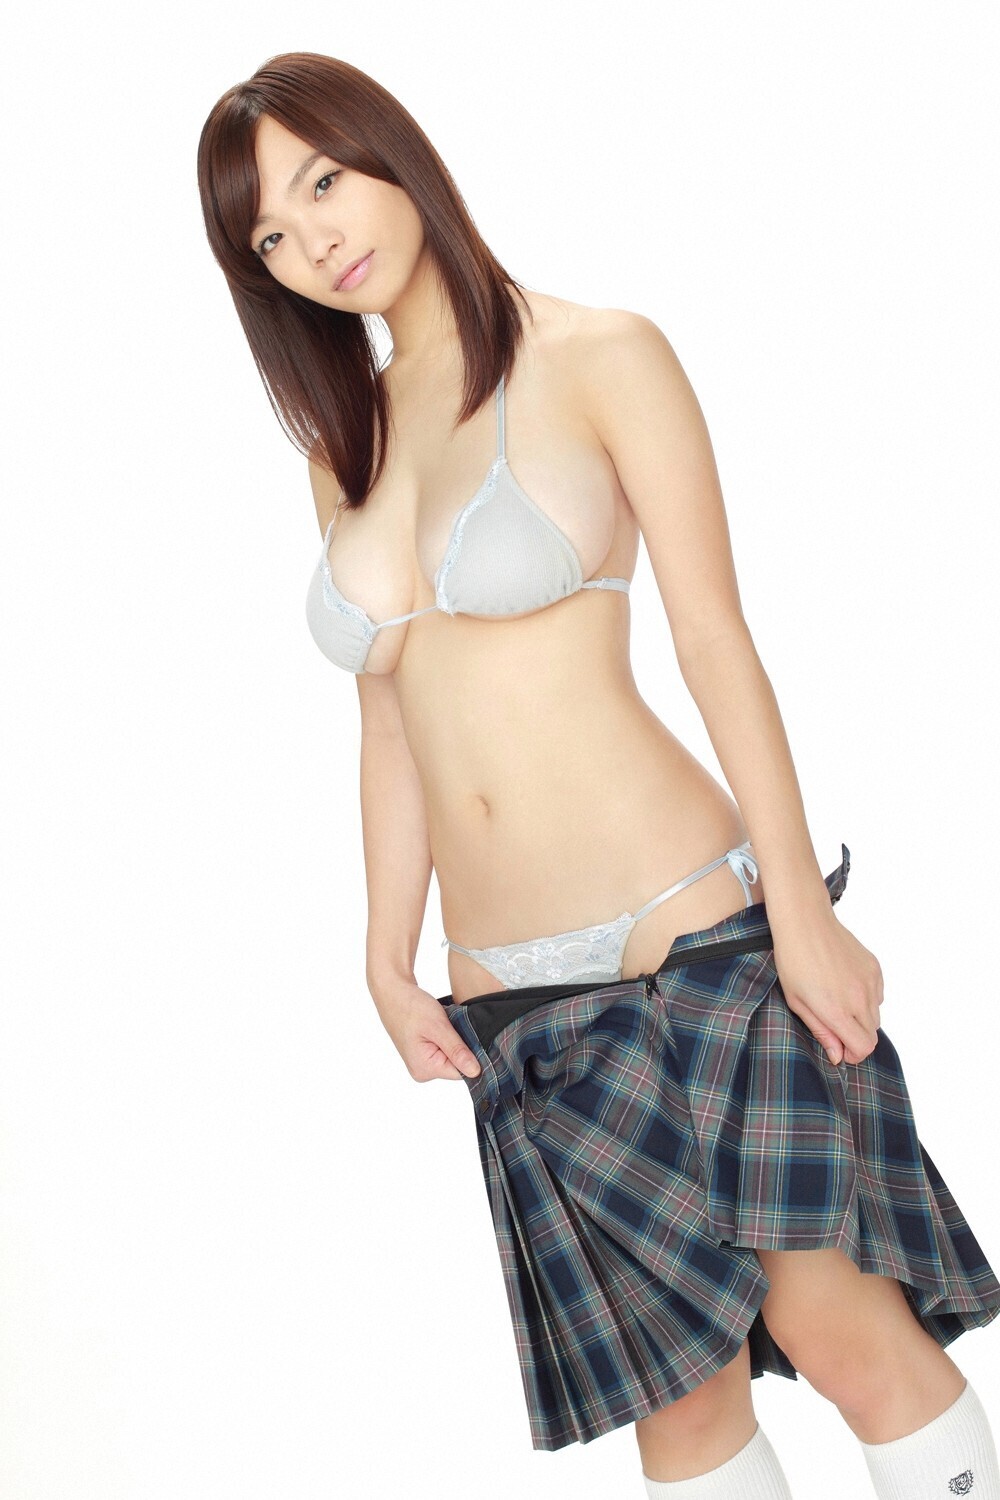 Mio takaba [ys web] vol.526 super sexy series